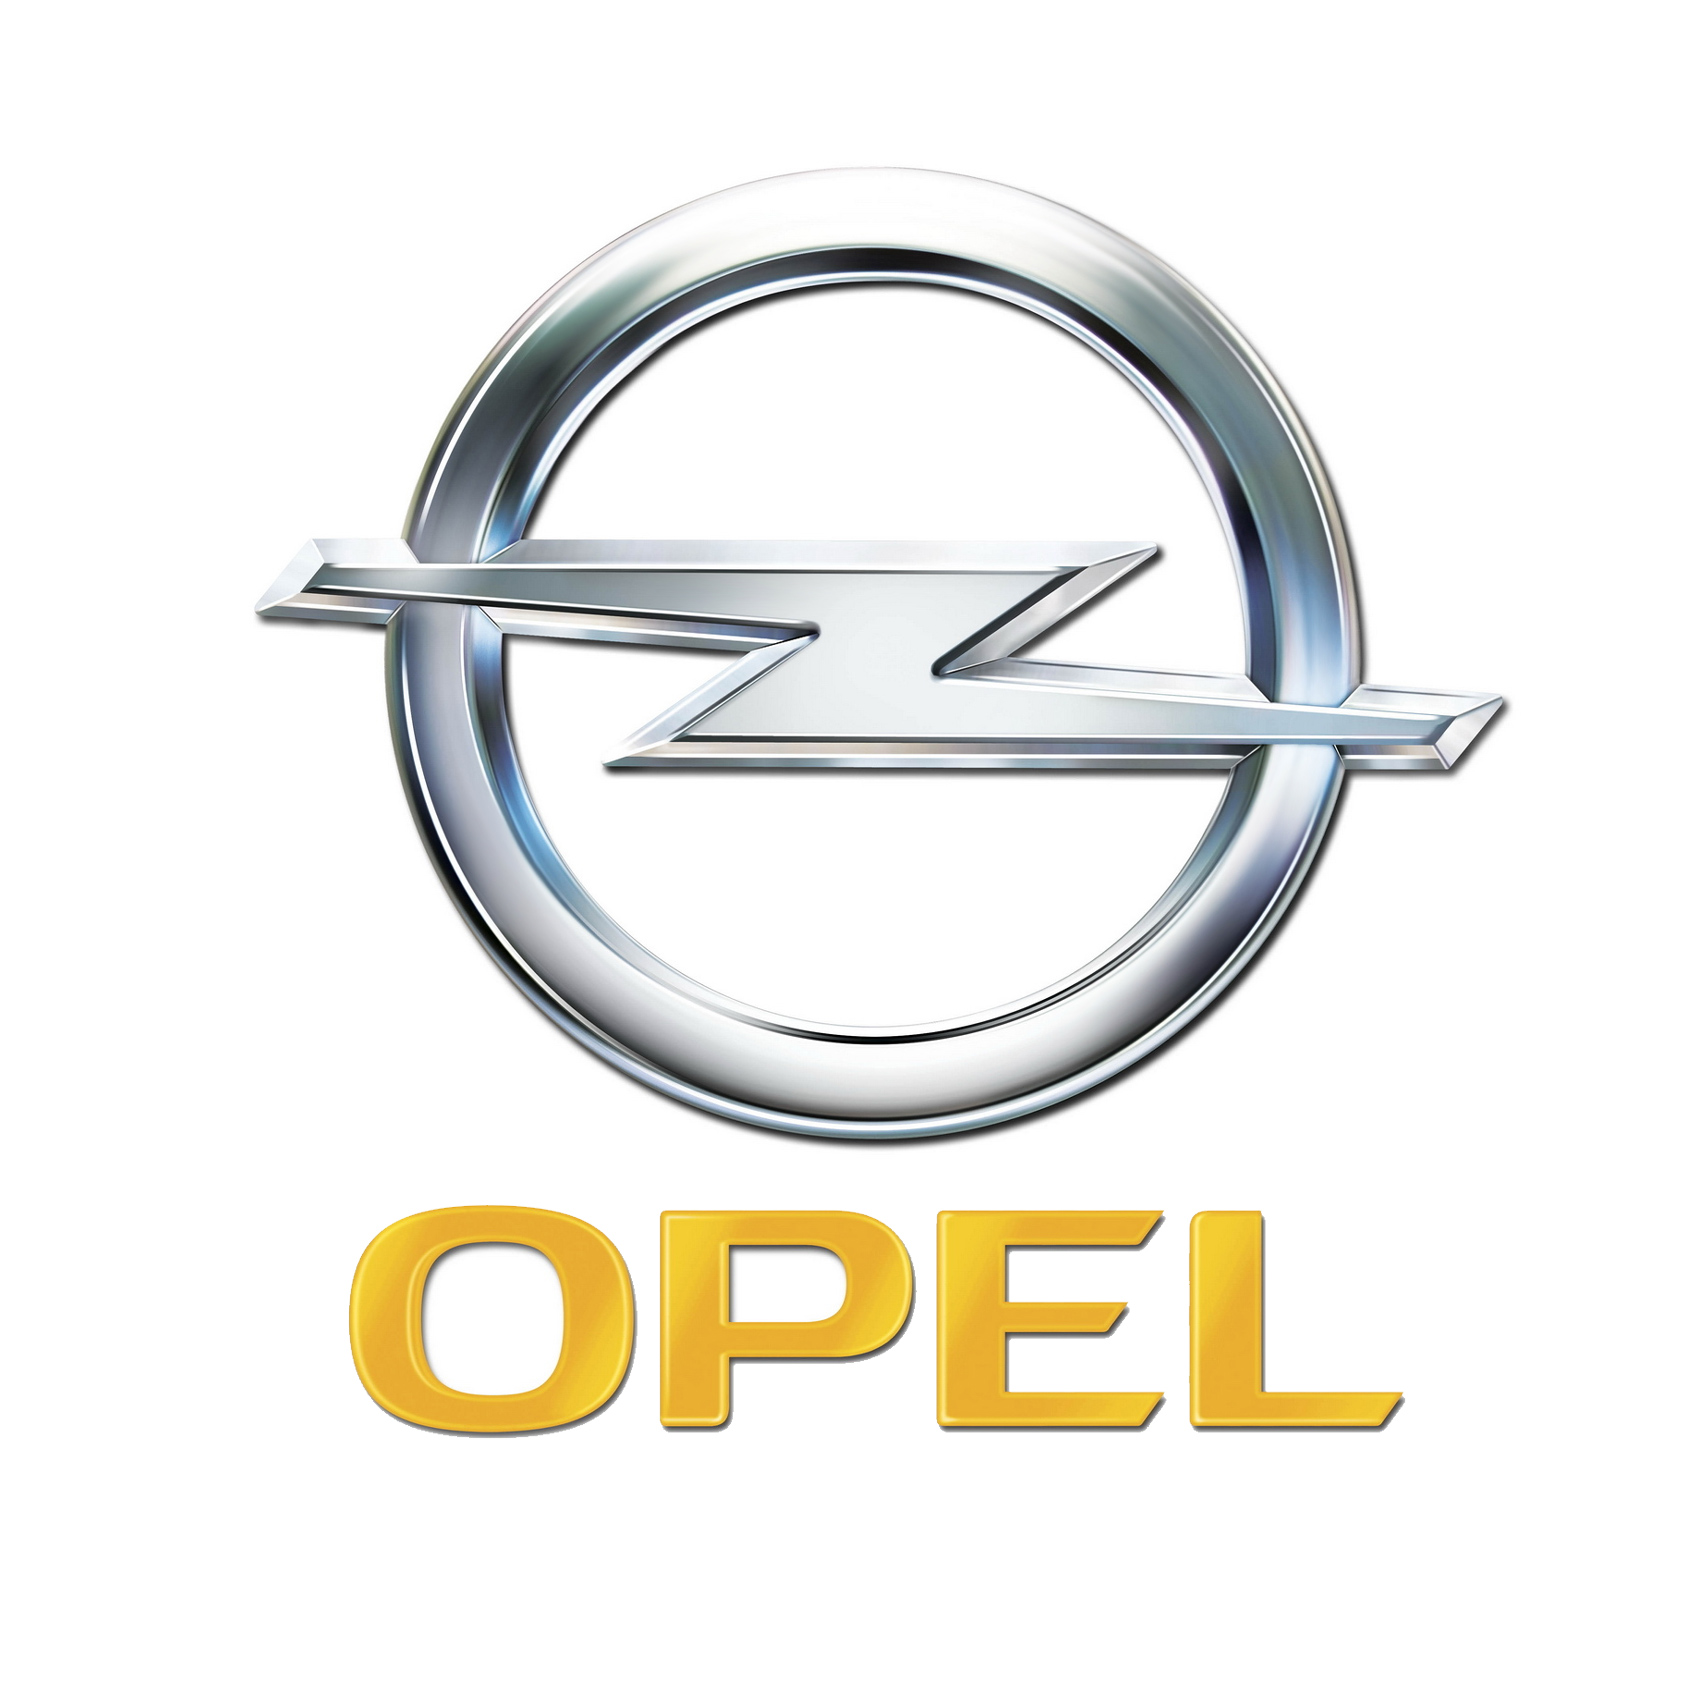 opel-cars-logo-emblem.jpg